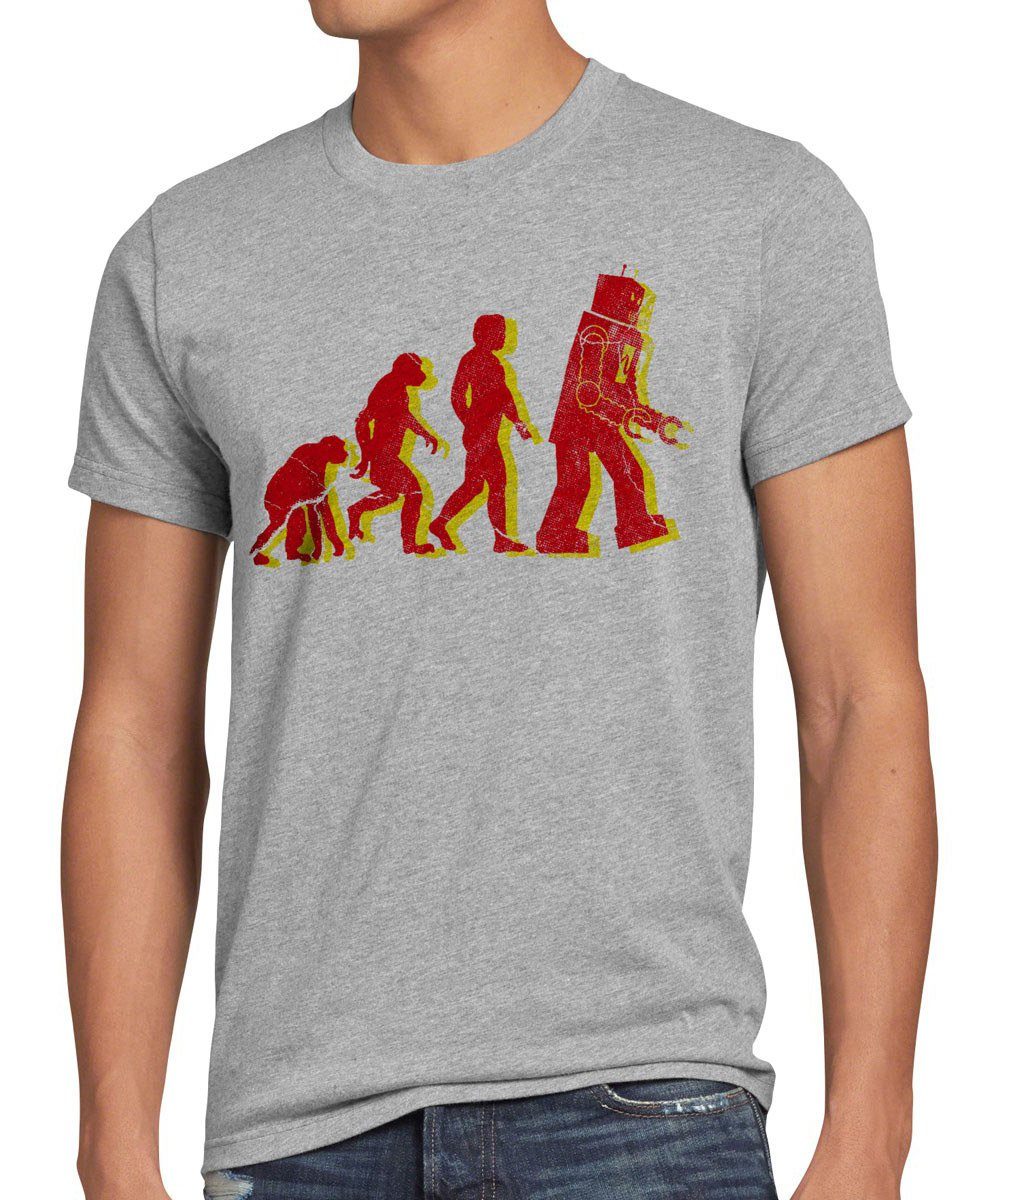 style3 Print-Shirt Herren T-Shirt Evolution big bang roboter sheldon theory cooper darwin neu robot grau meliert